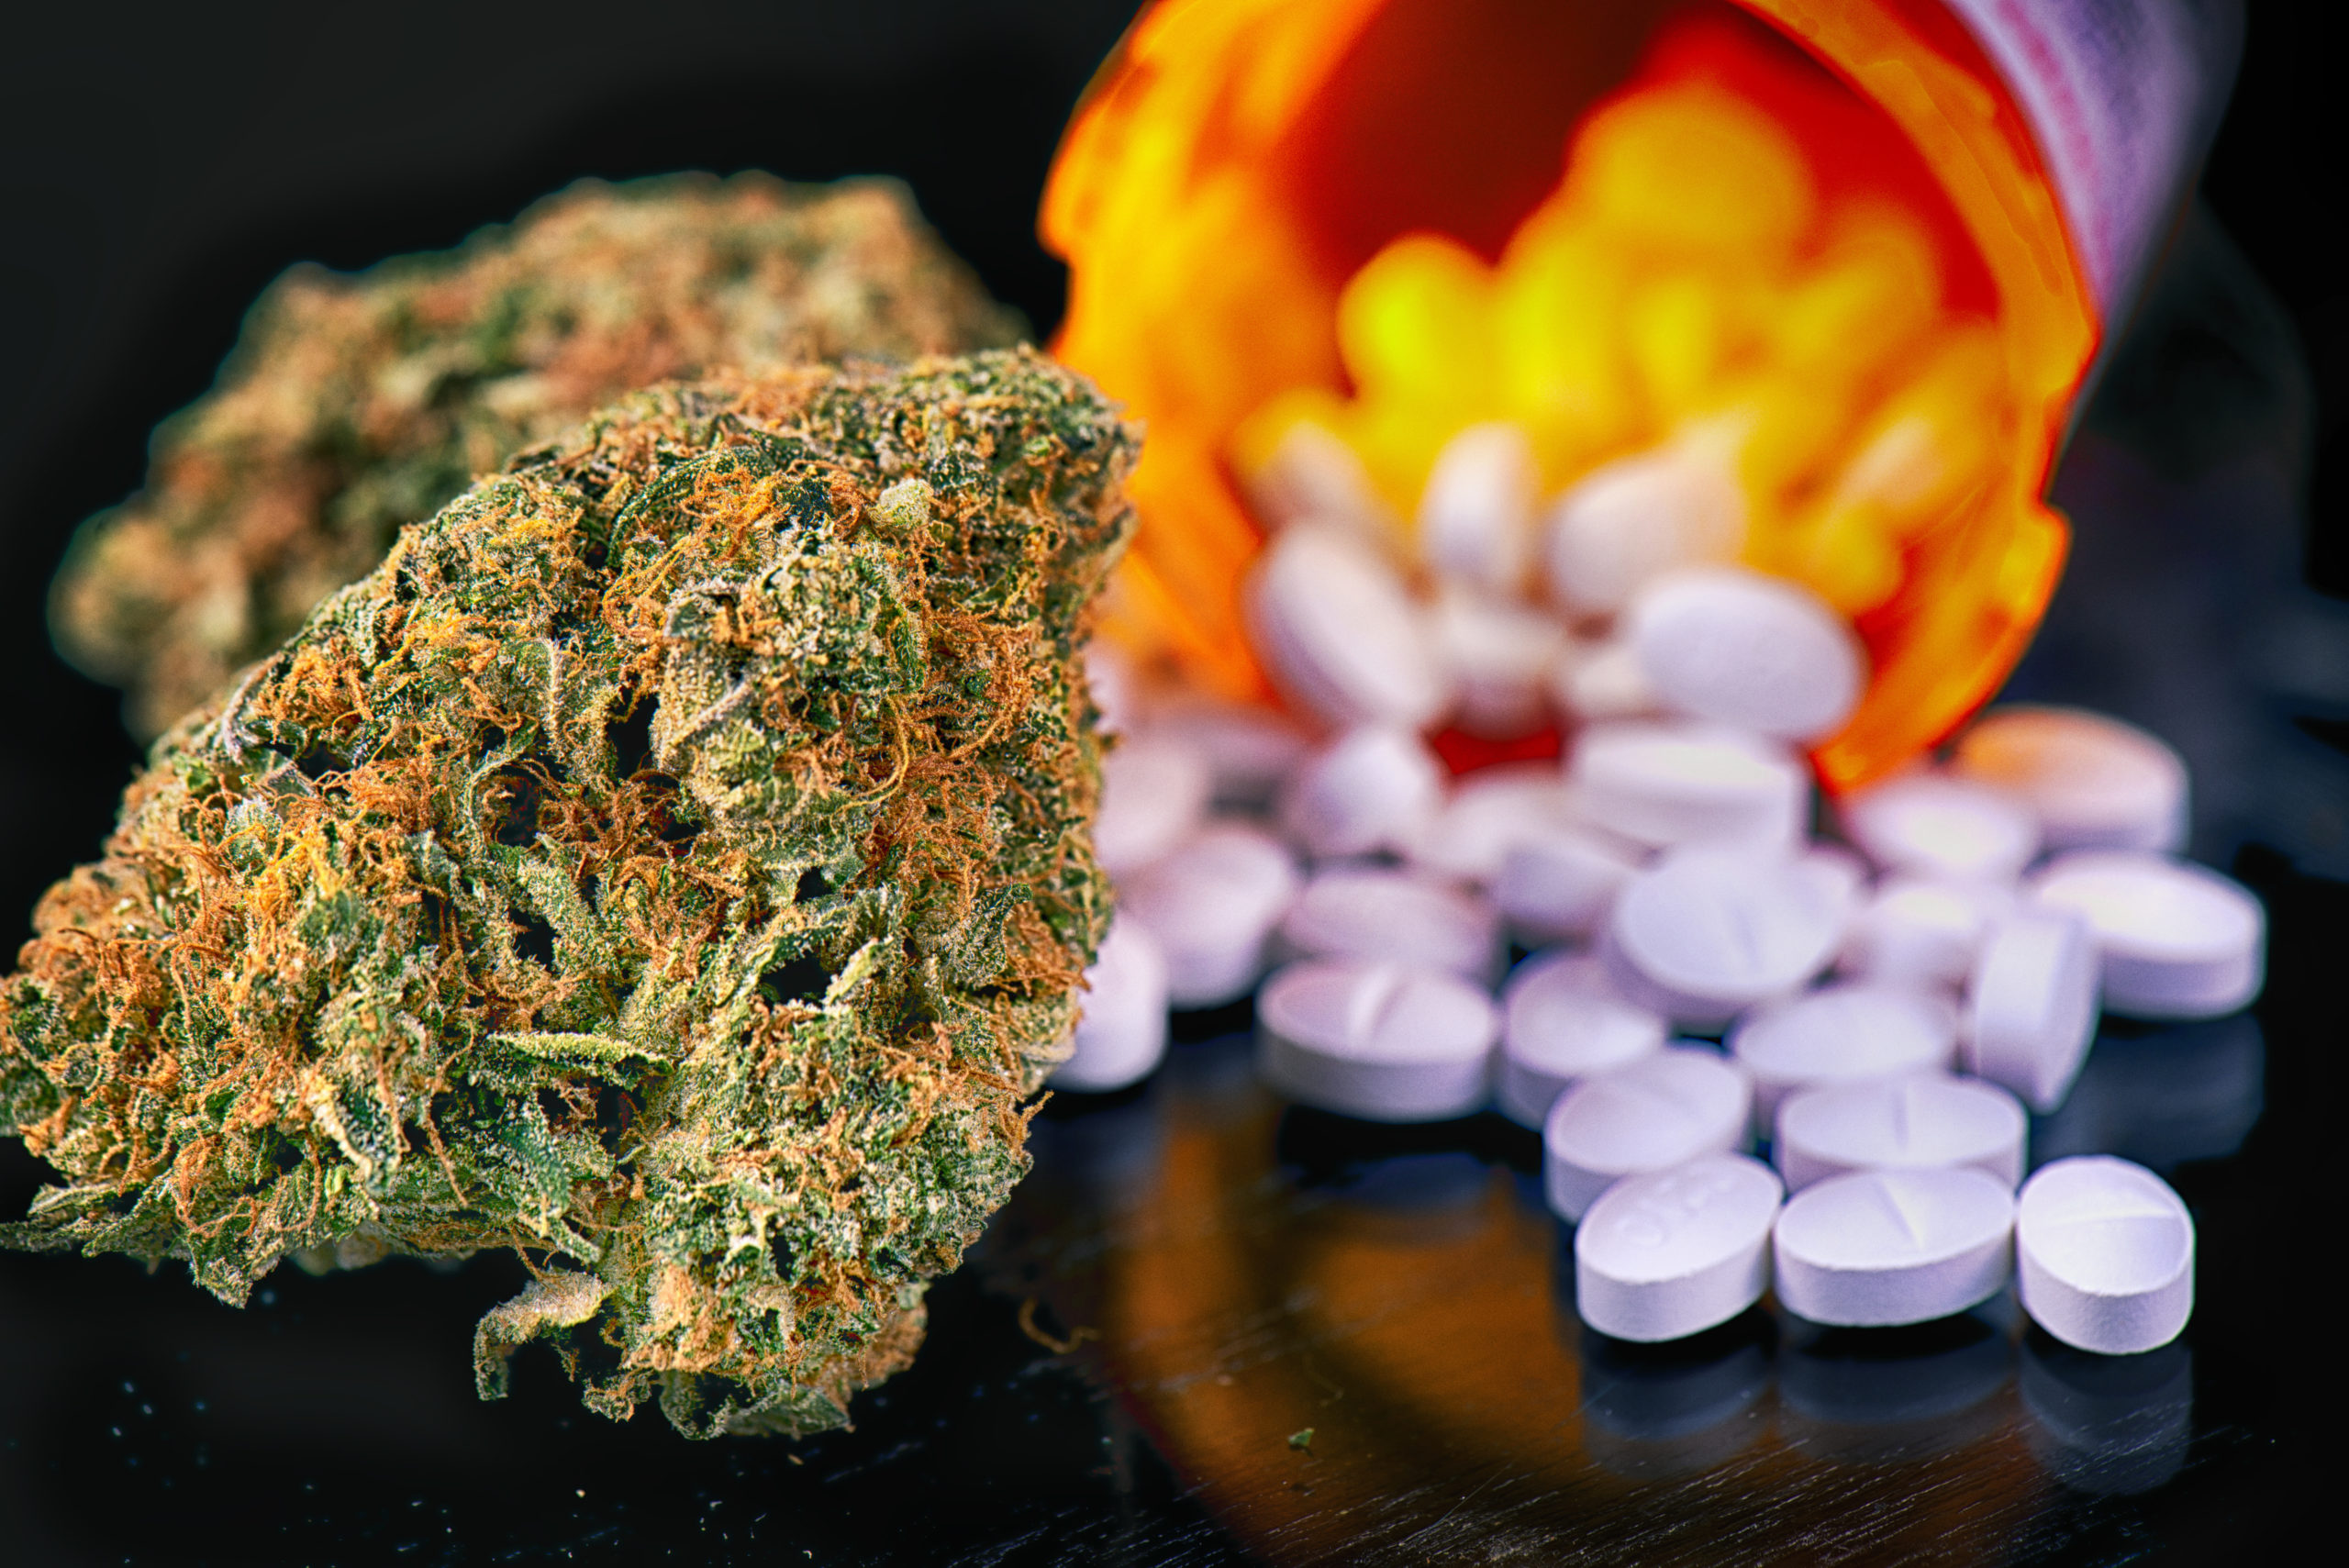 The Dangerous Combination Of Opioids & Cannabis